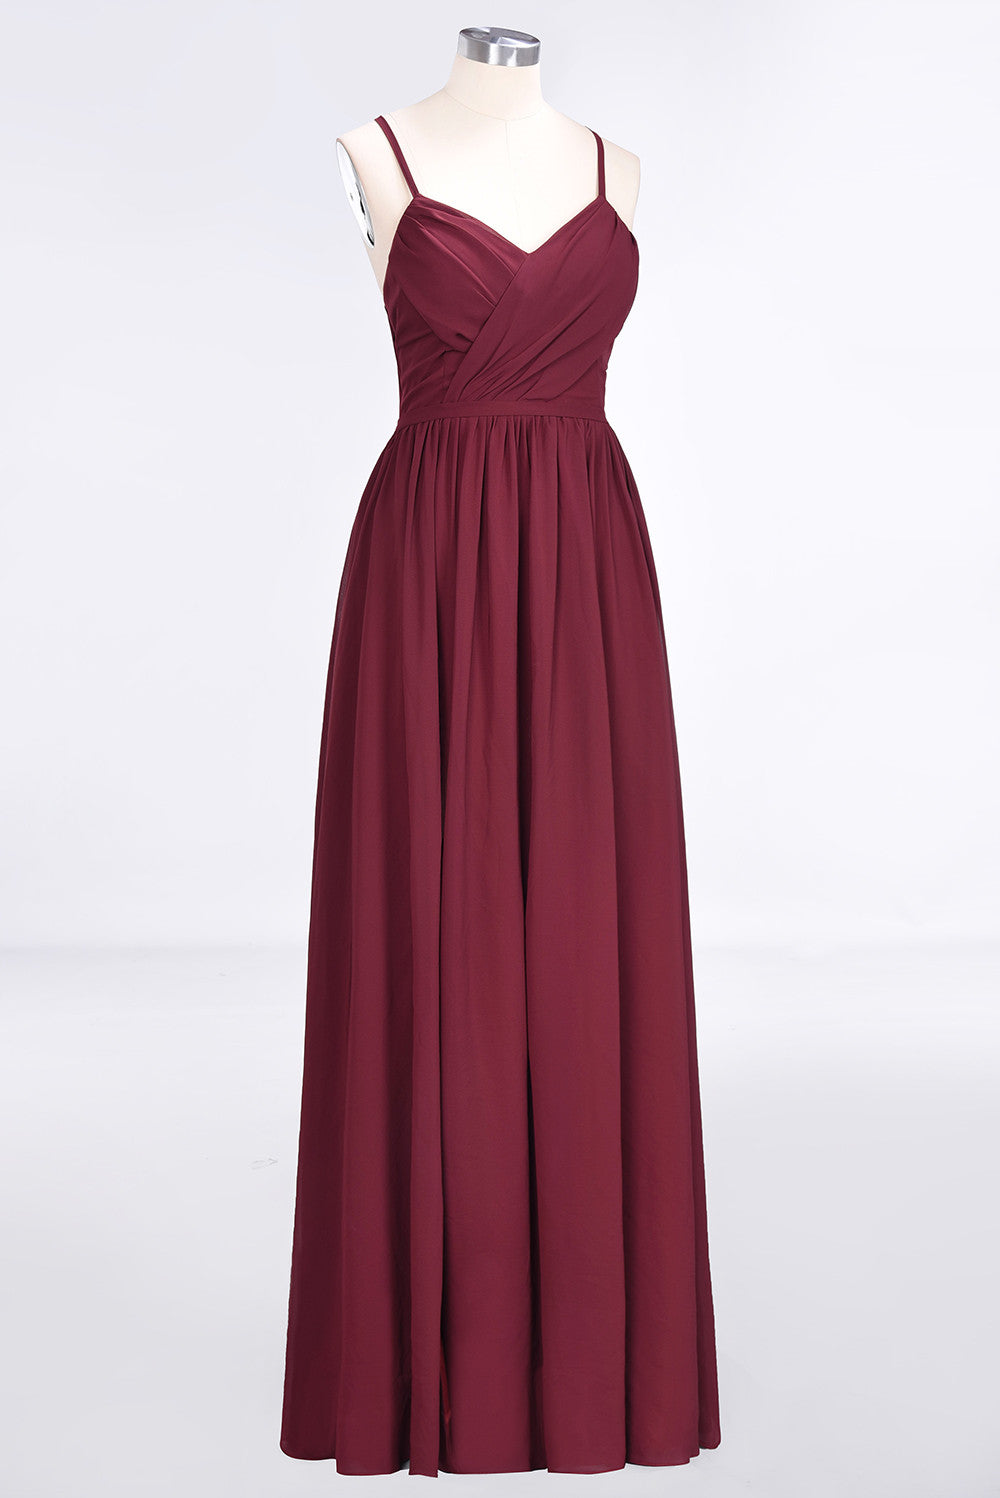 Elegant Chiffon V-Neck Burgundy Bridesmaid Dresses With Spaghetti-Straps-27dress